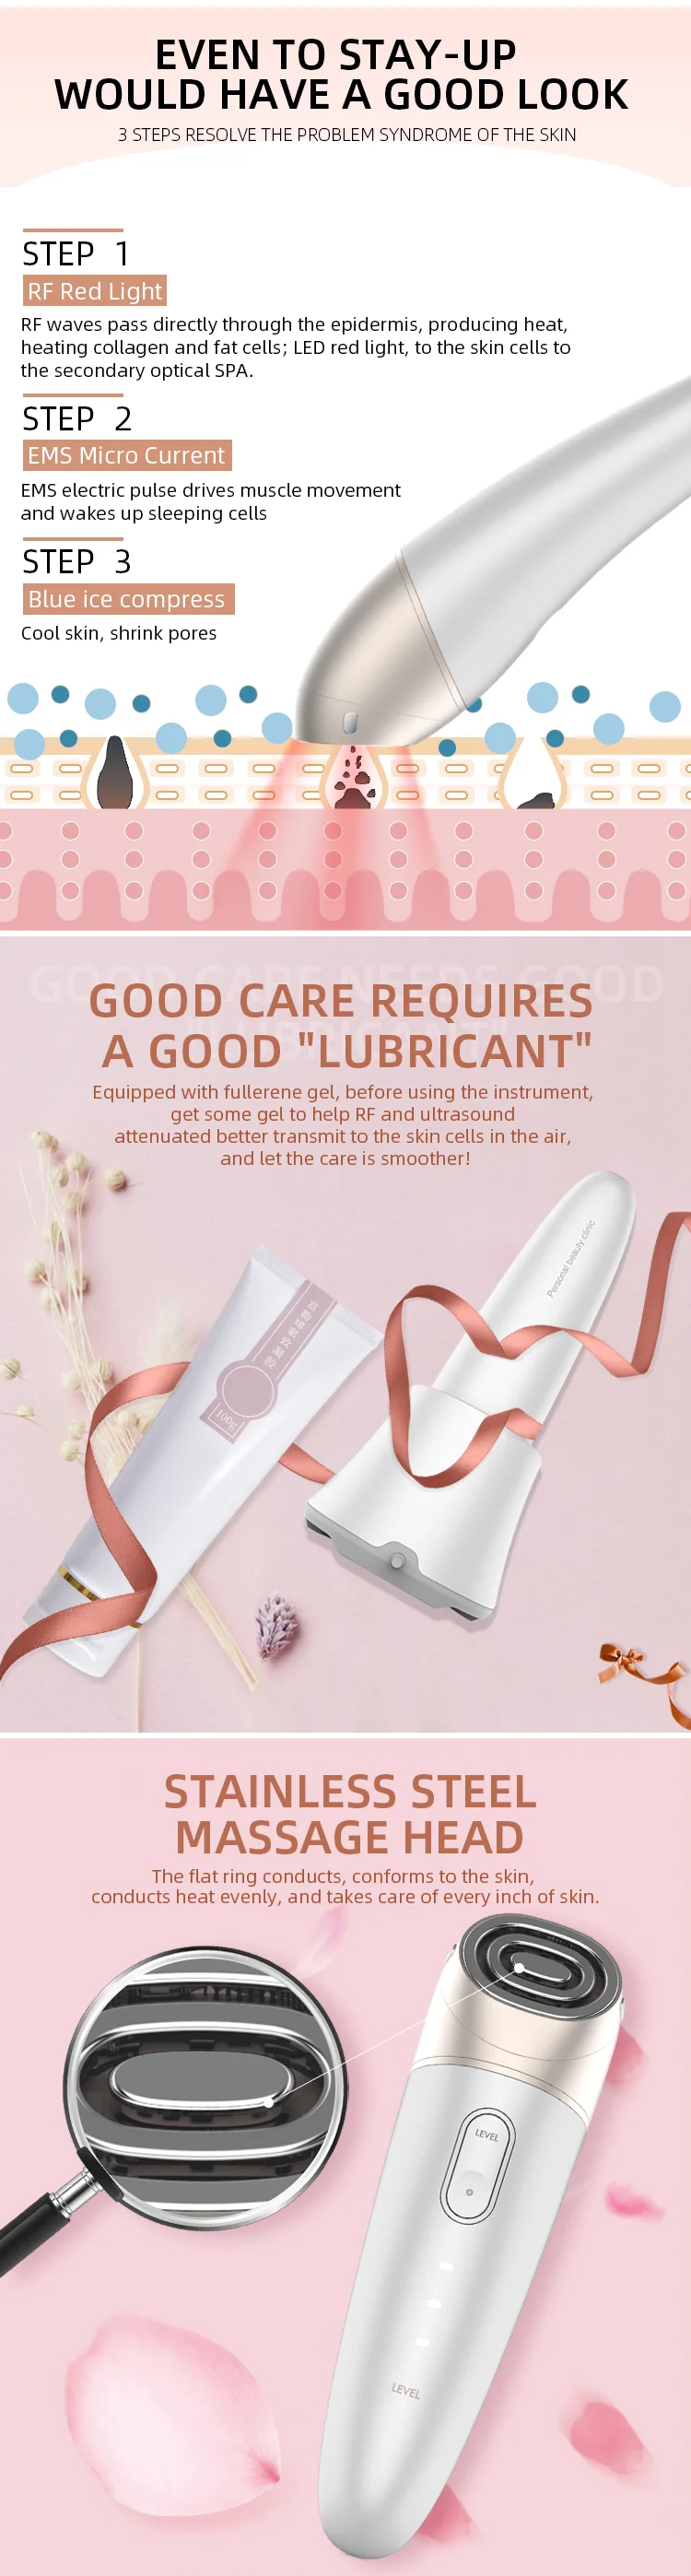 Skin Care Product 2020 Ice compress skin RF Facial Massage Beauty Machine Equipment